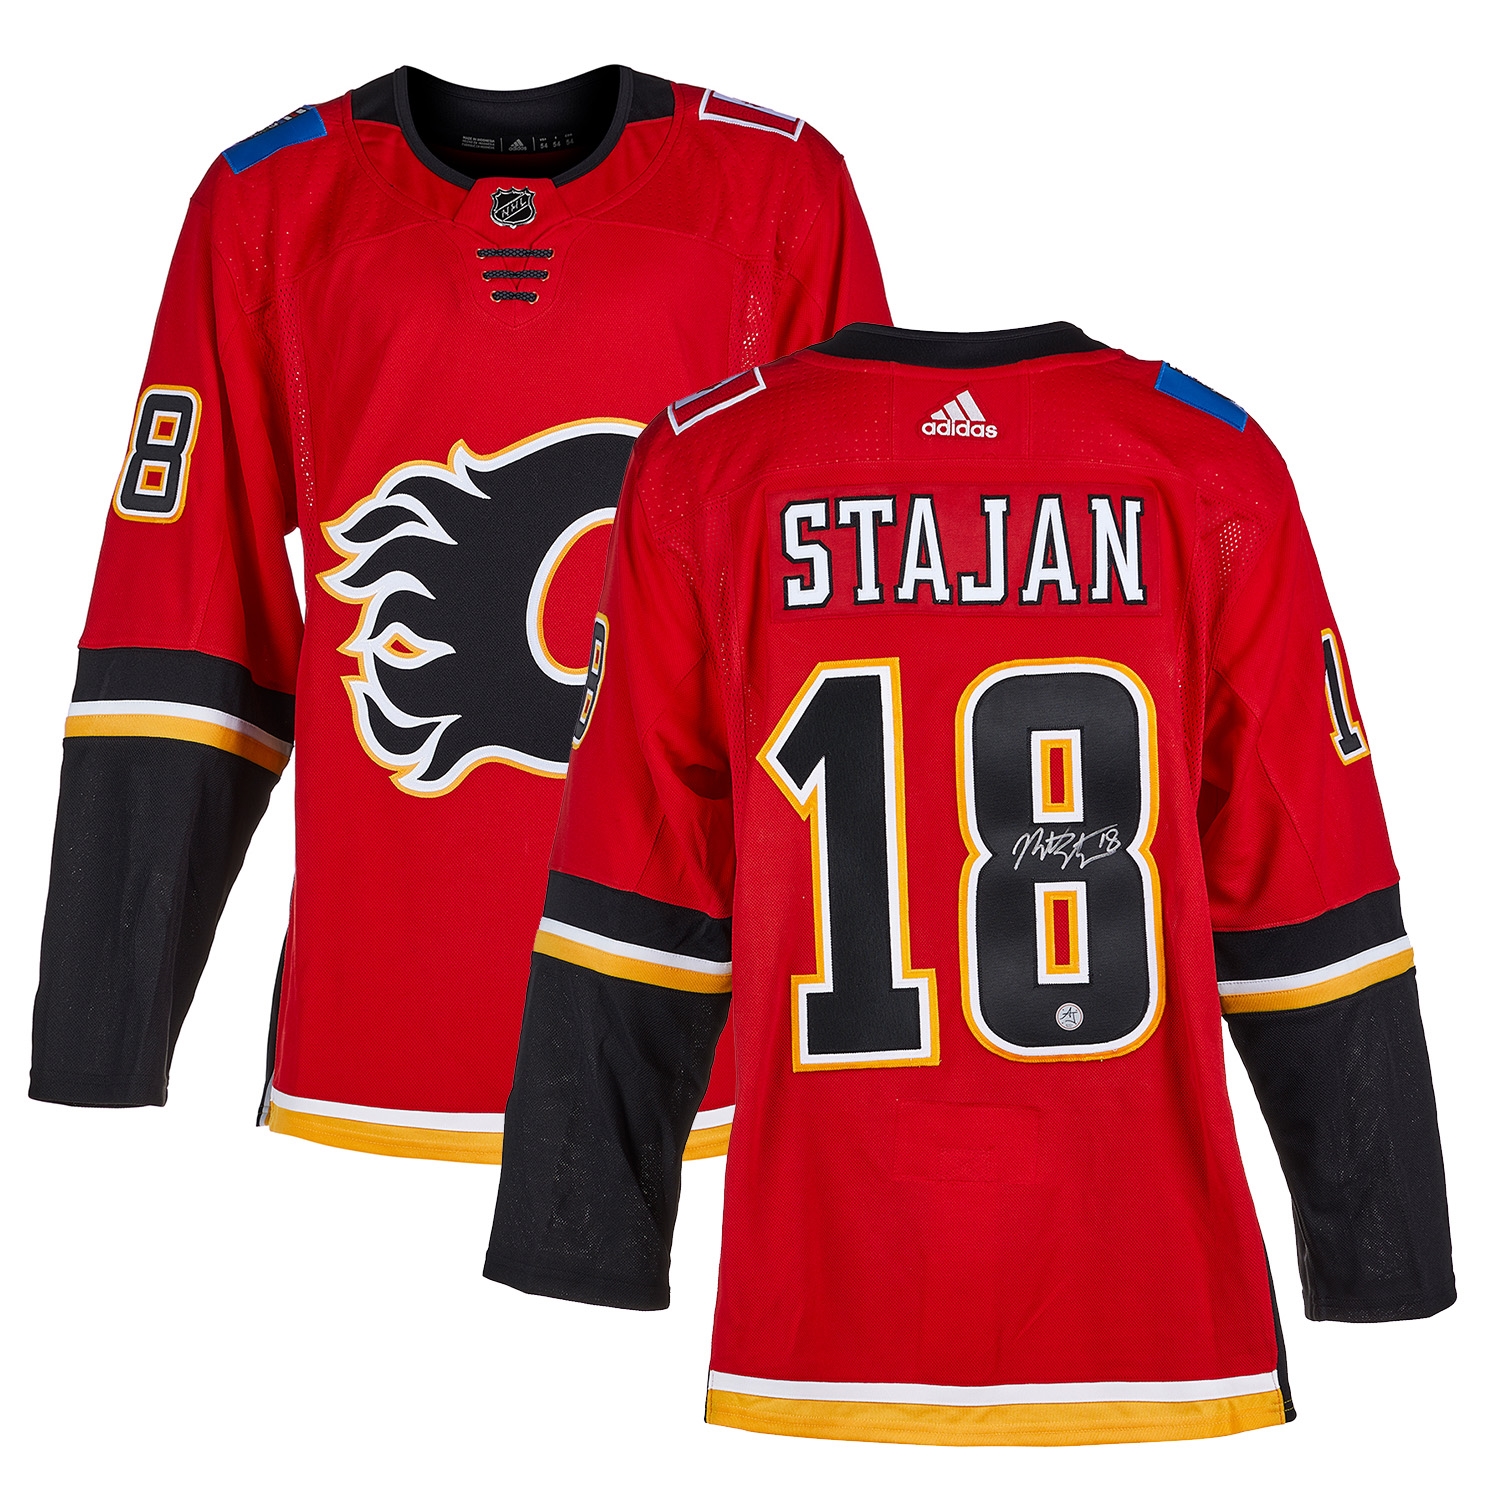 Matt Stajan Calgary Flames Autographed adidas Jersey